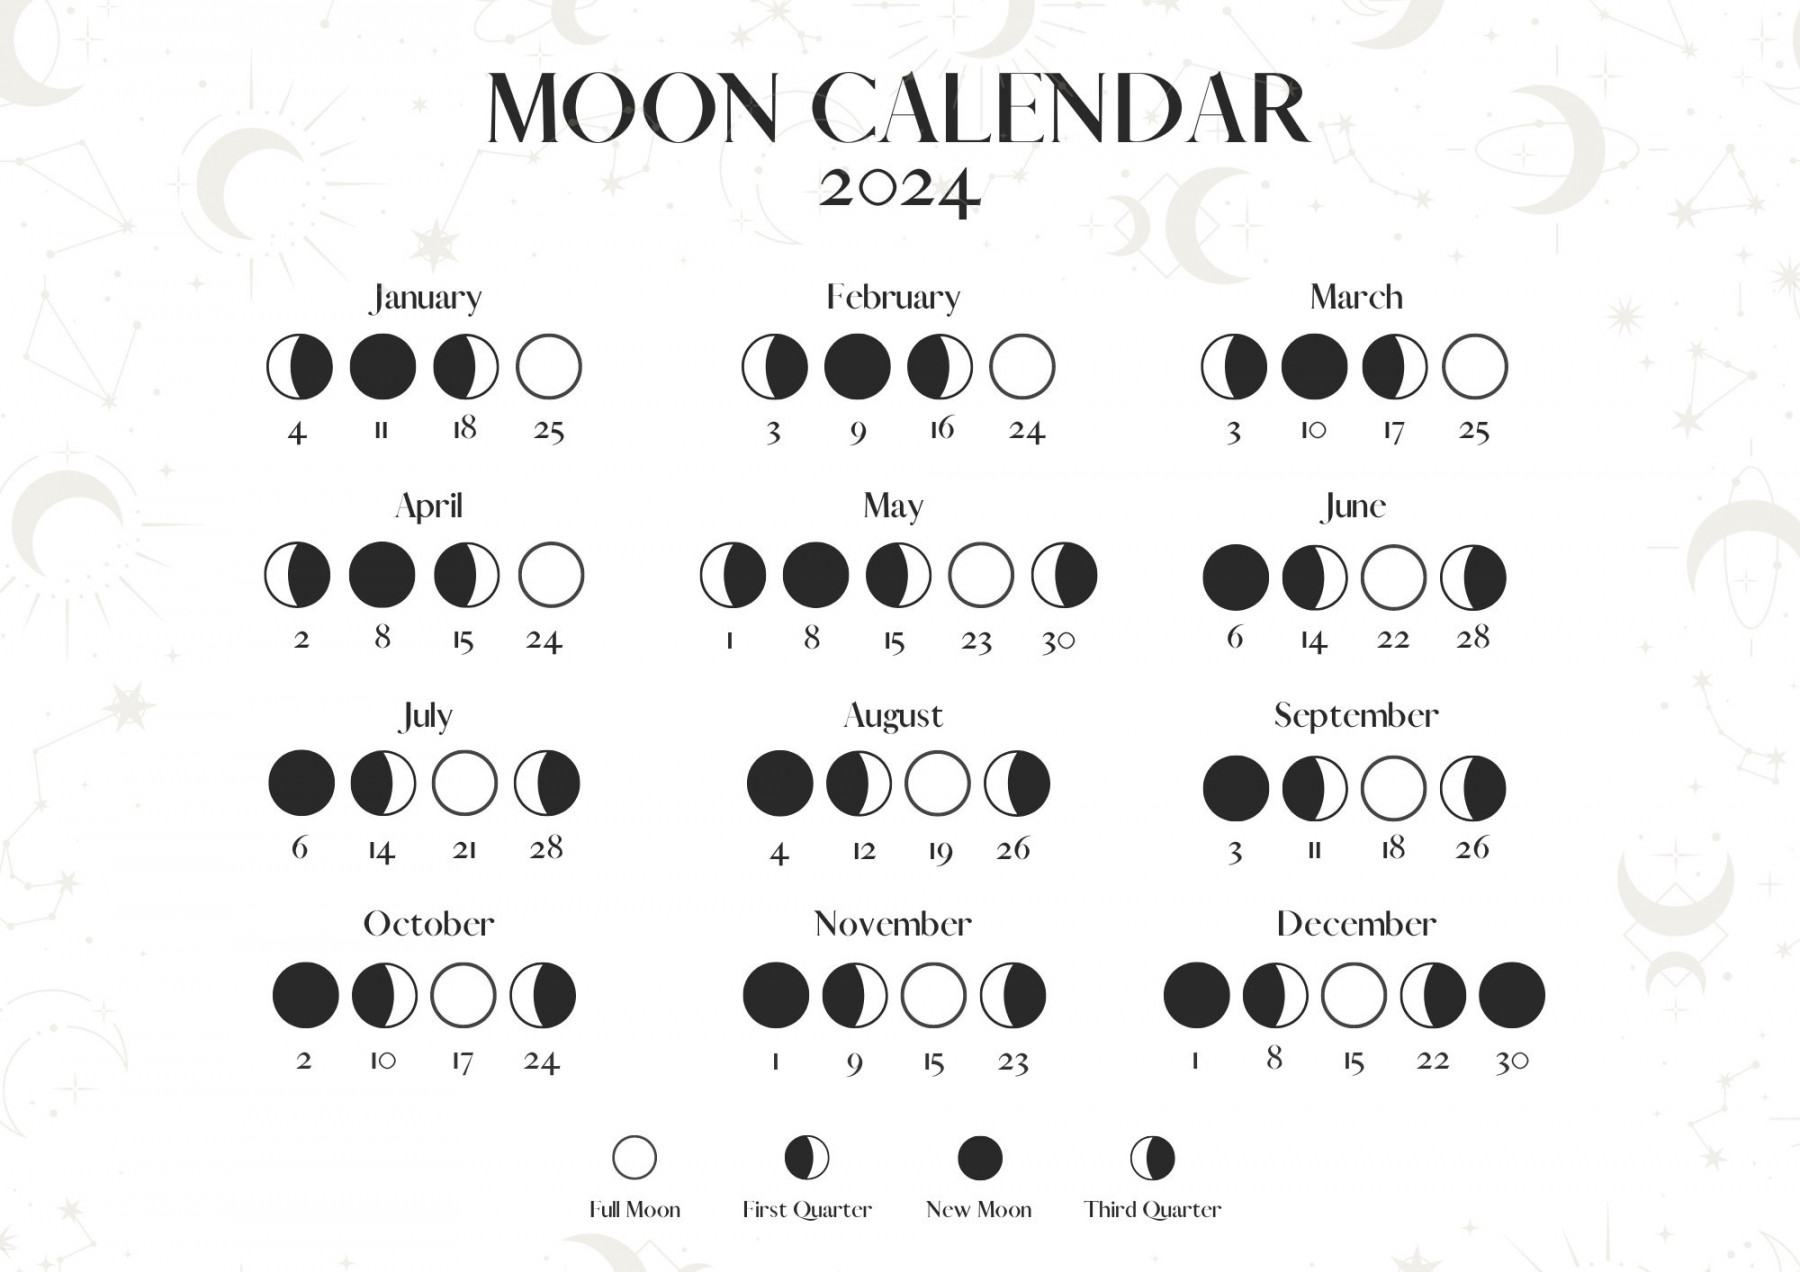 Moon Calendar Moon Phases Lunar Calendar Printable in A